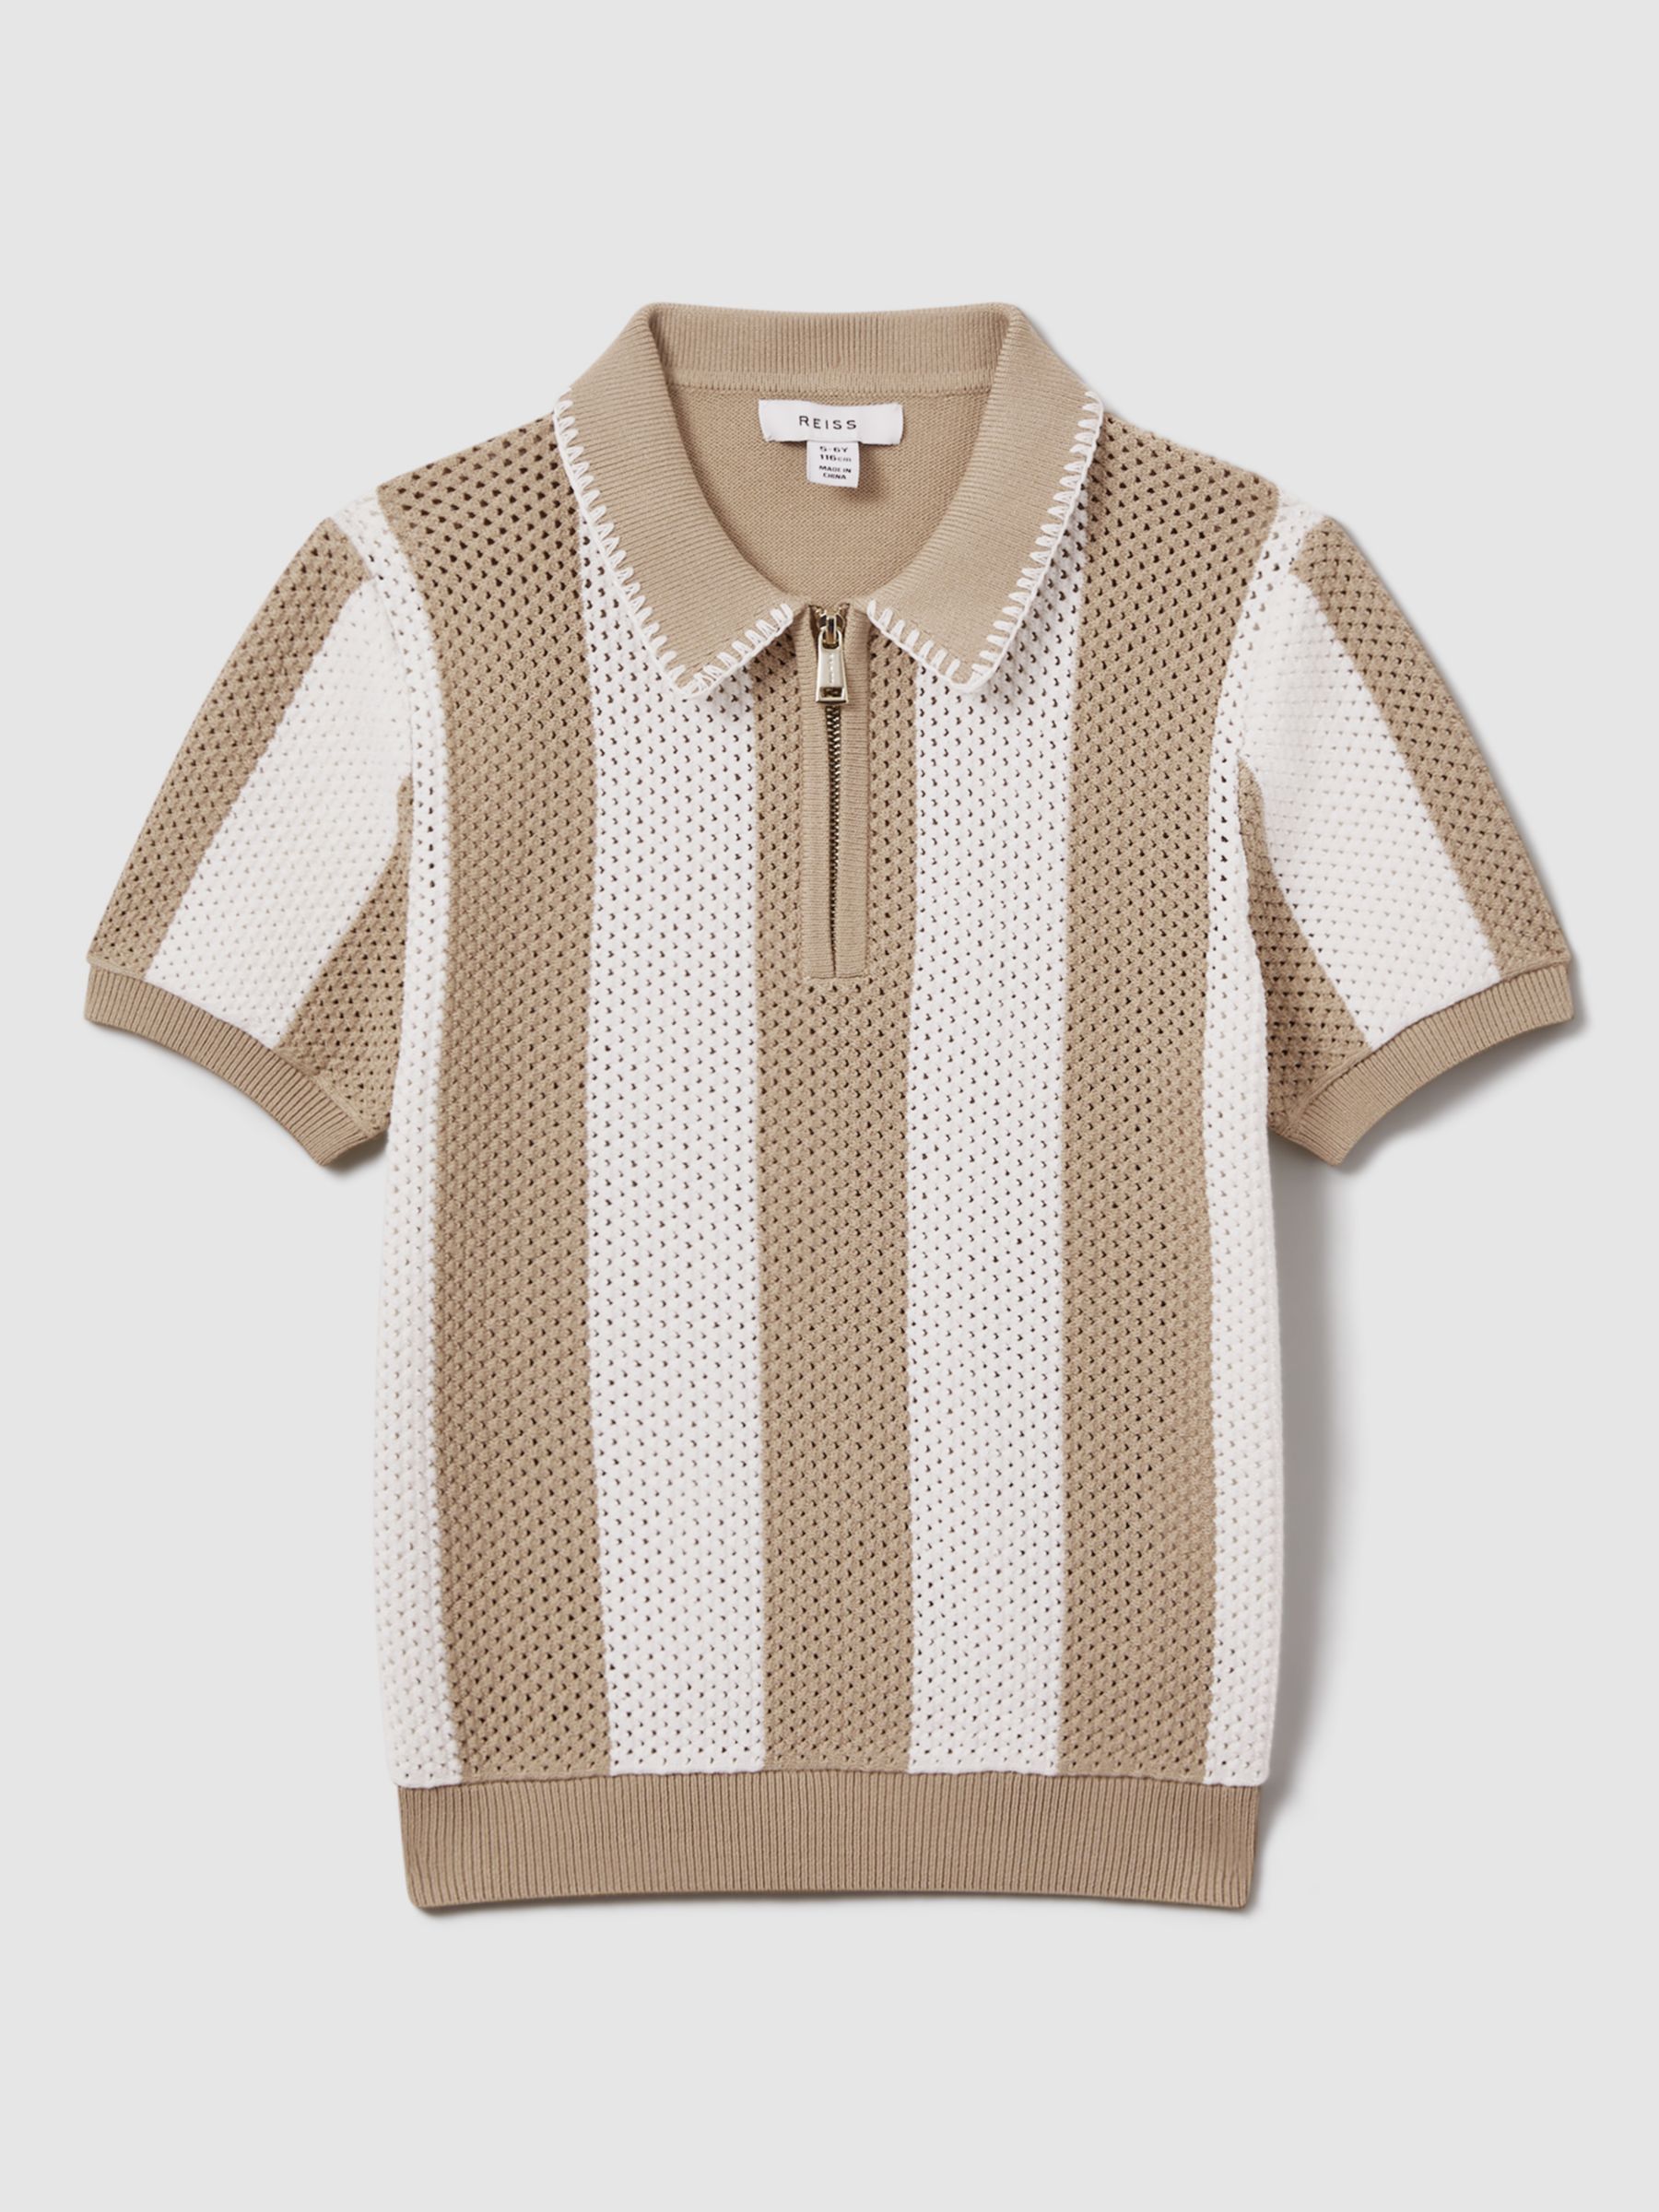 Reiss Kids' Paros Stripe Half Zip Short Sleeve Top, Taupe/Optic White, 3-4 years